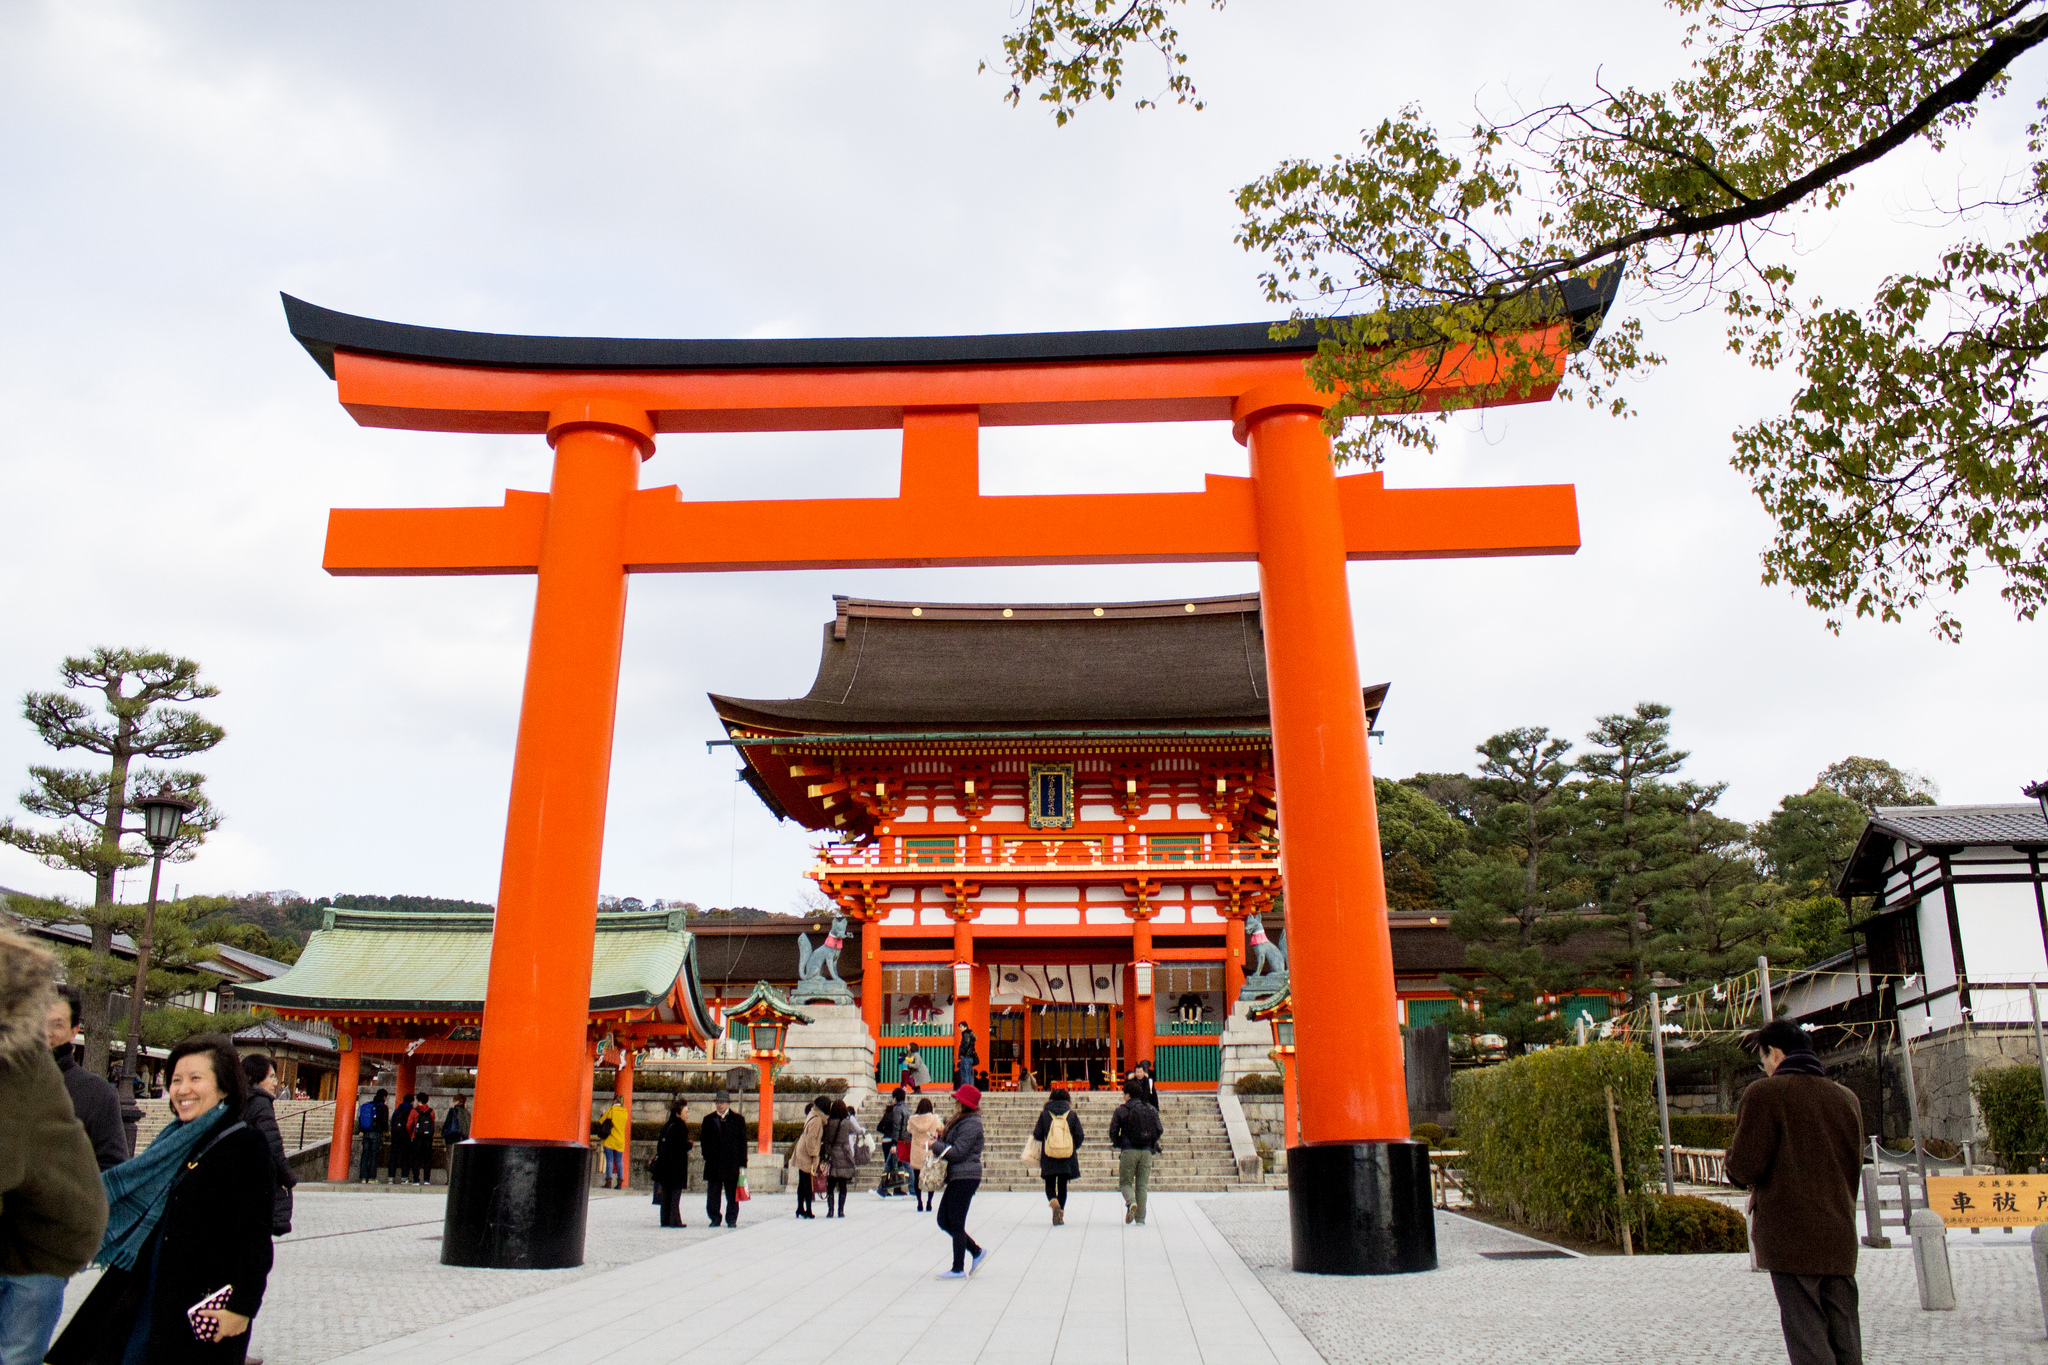 Let’s Go Shrine Hopping! 5 Famous Shinto Shrines in Japan You Must Visit - Fushimi Inari Shrine (3)